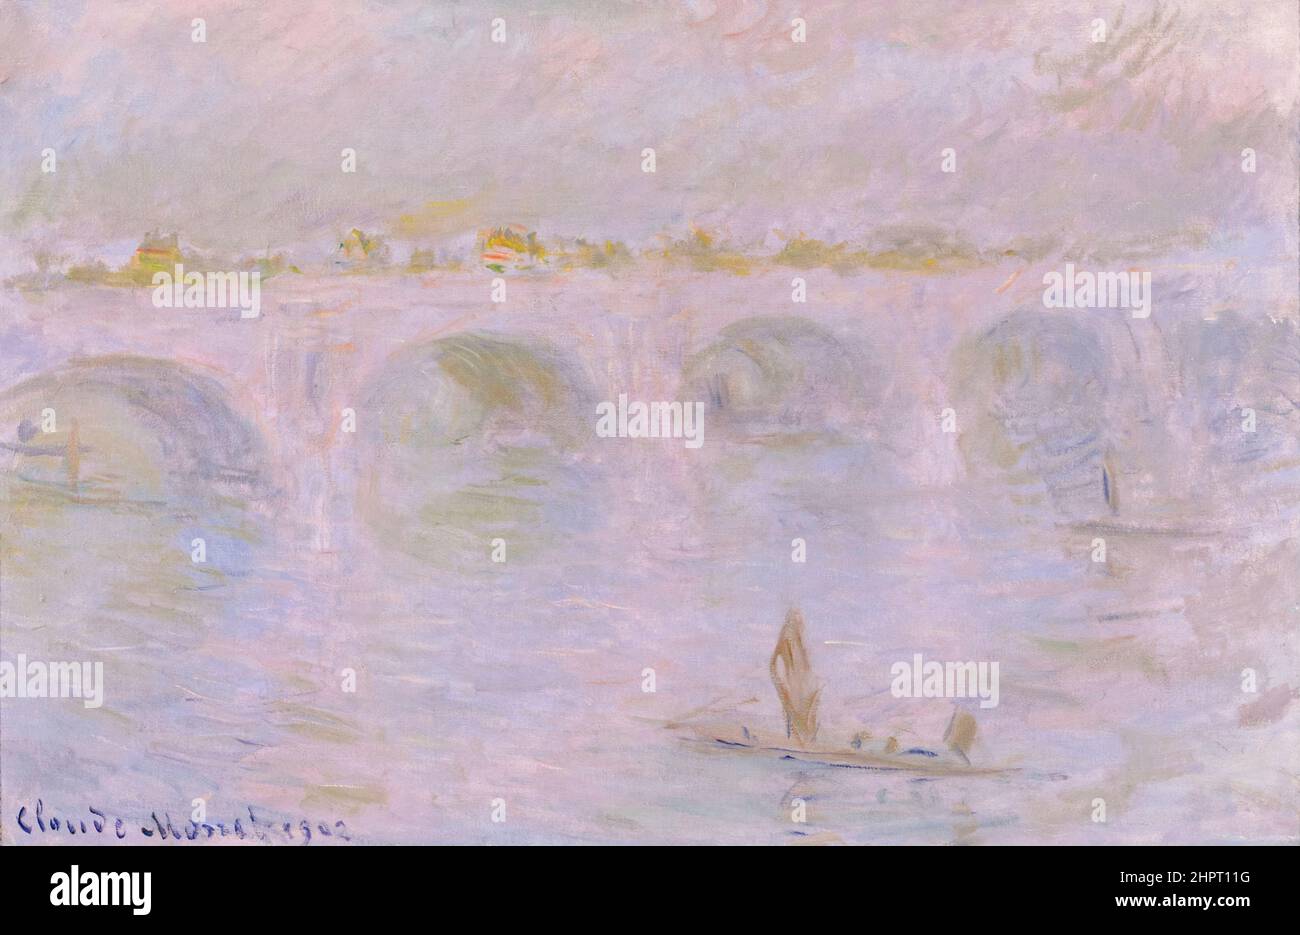 Claude Monet, Waterloo Bridge in London, landscape painting, oil on canvas, 1902 Stock Photo